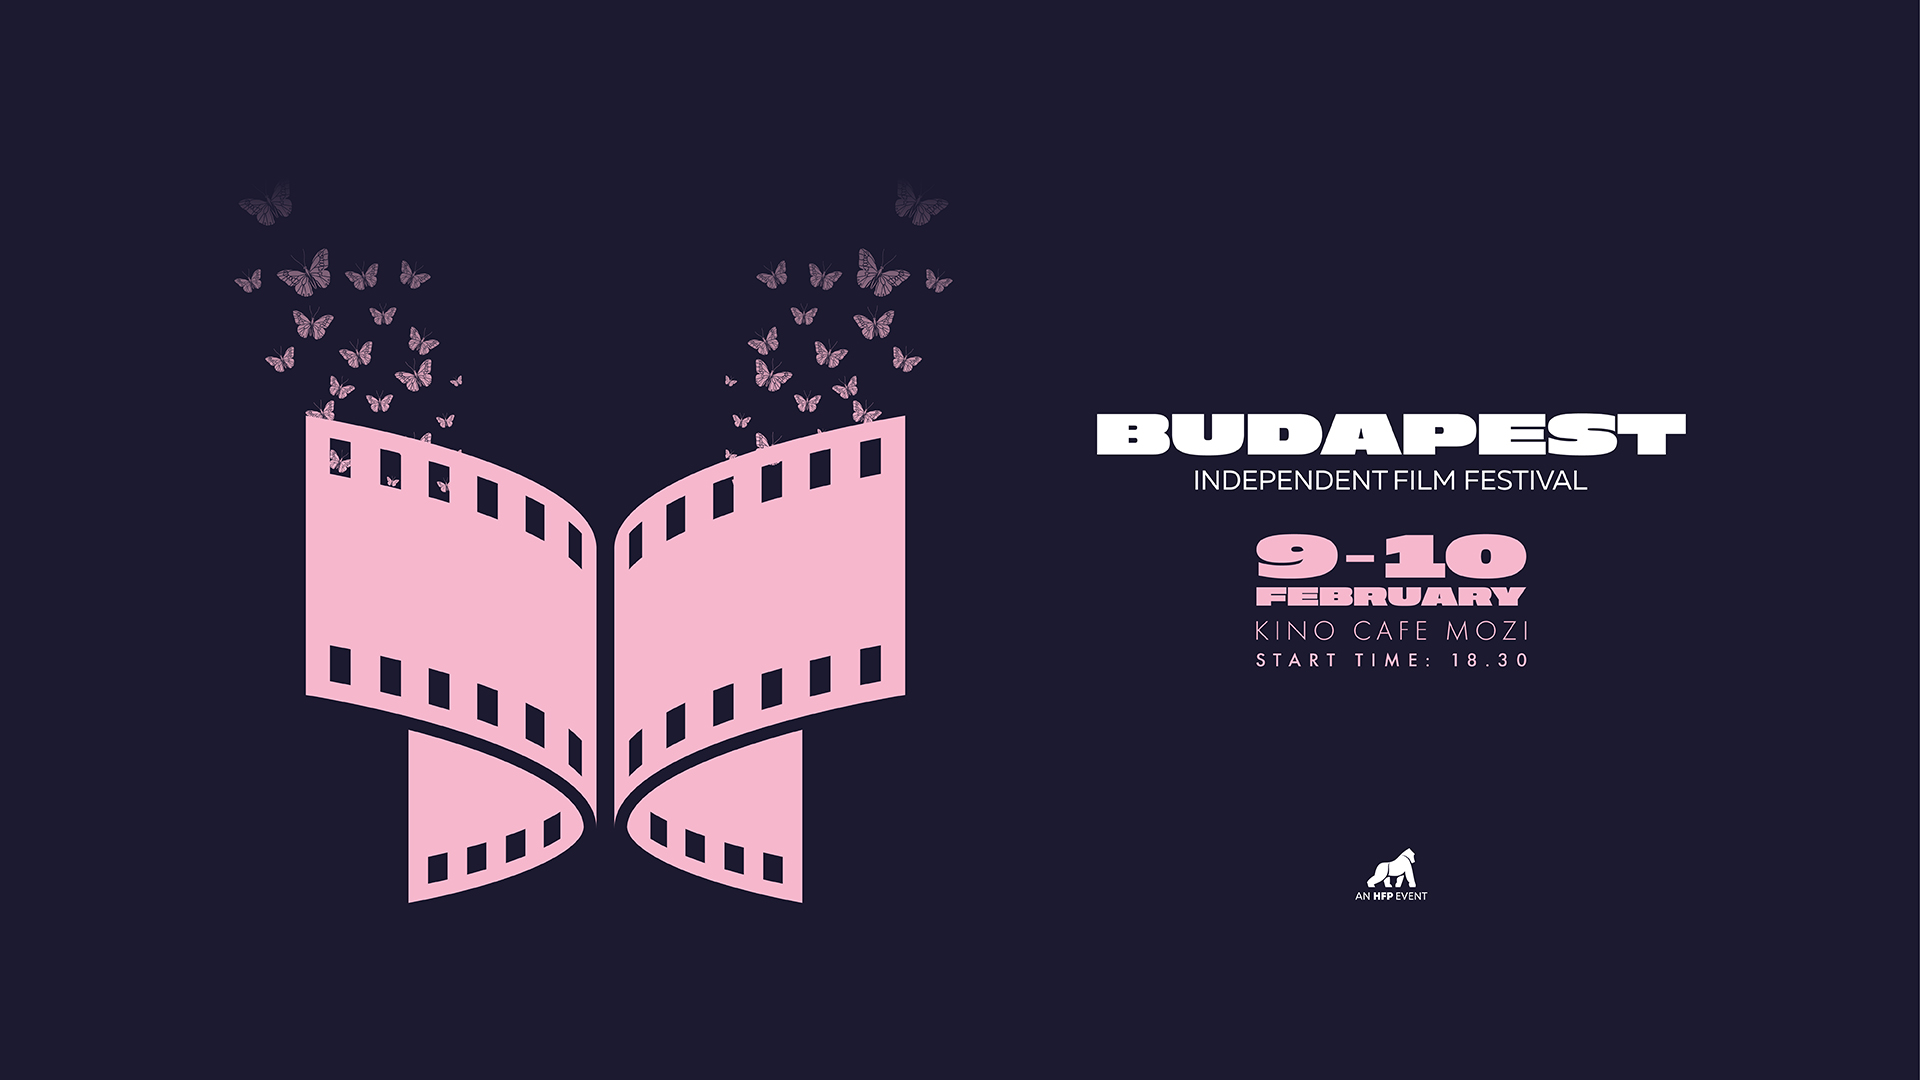 festivalul de film independent de la budapest